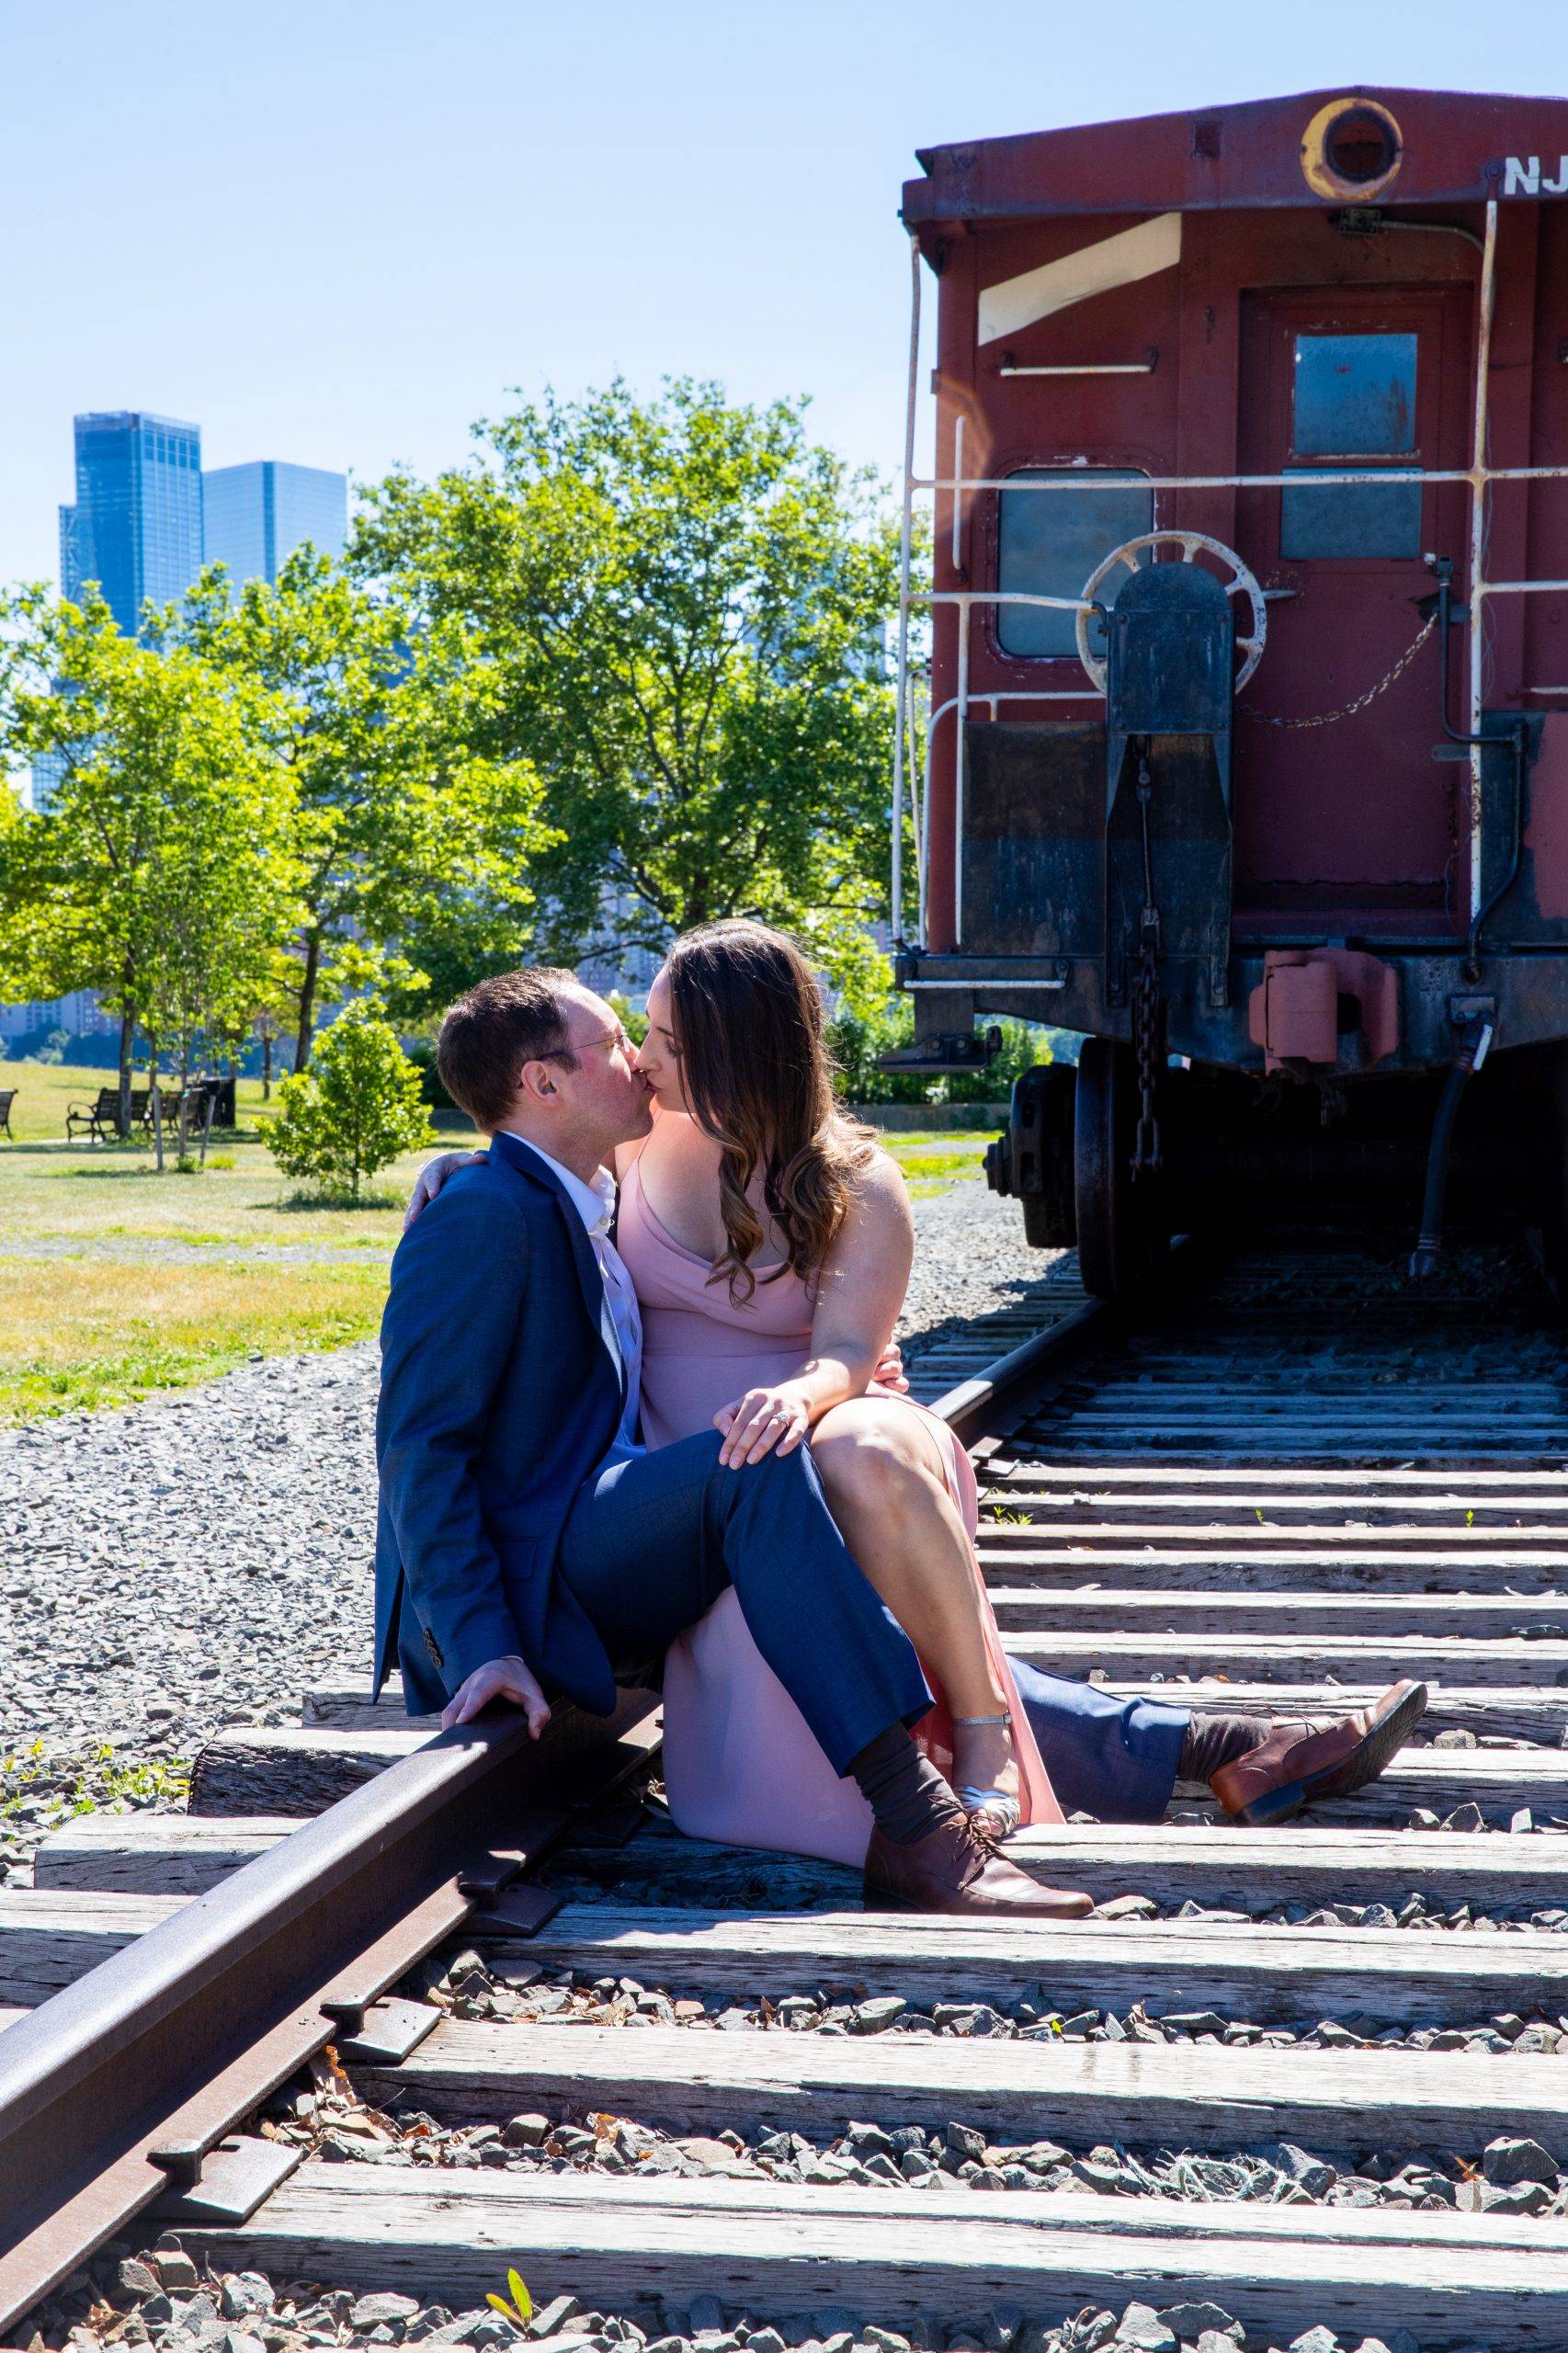 A couple kissing on the train tracks.